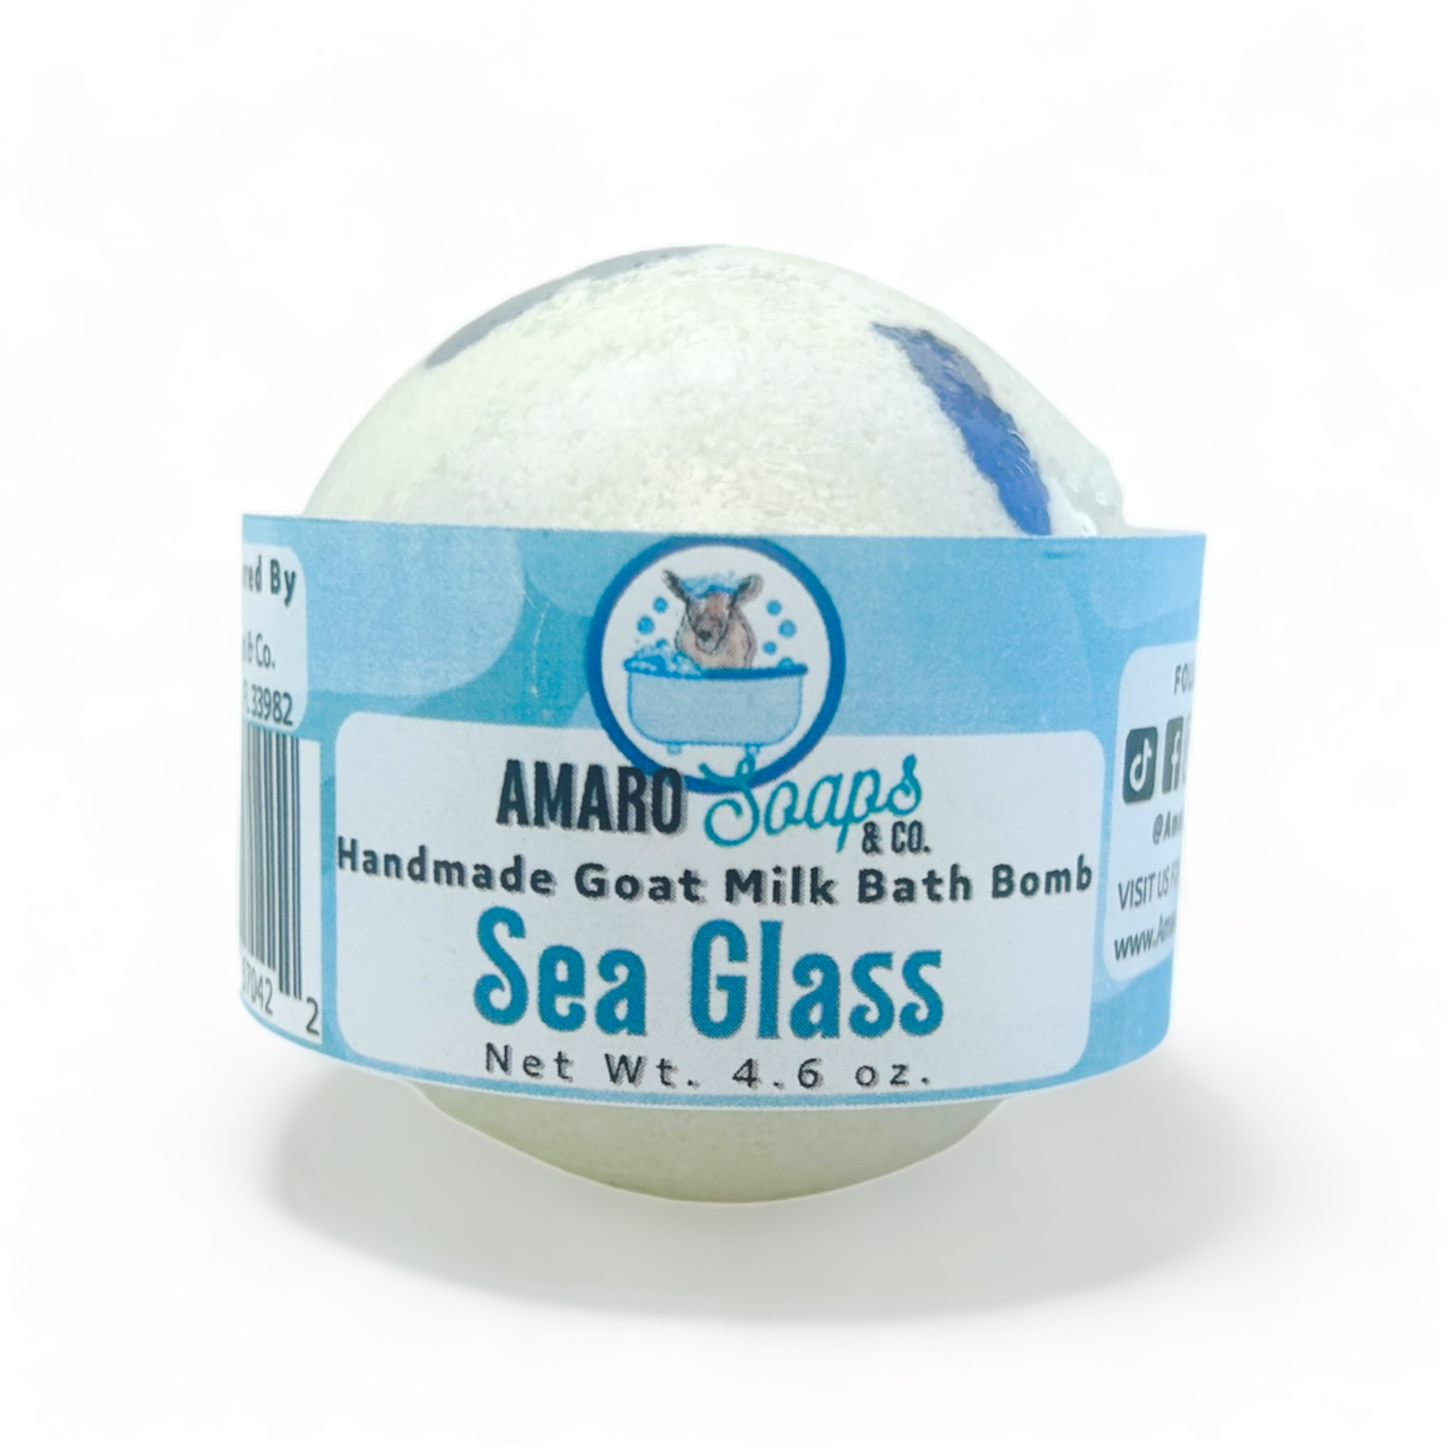 Sea Glass Bath Bomb